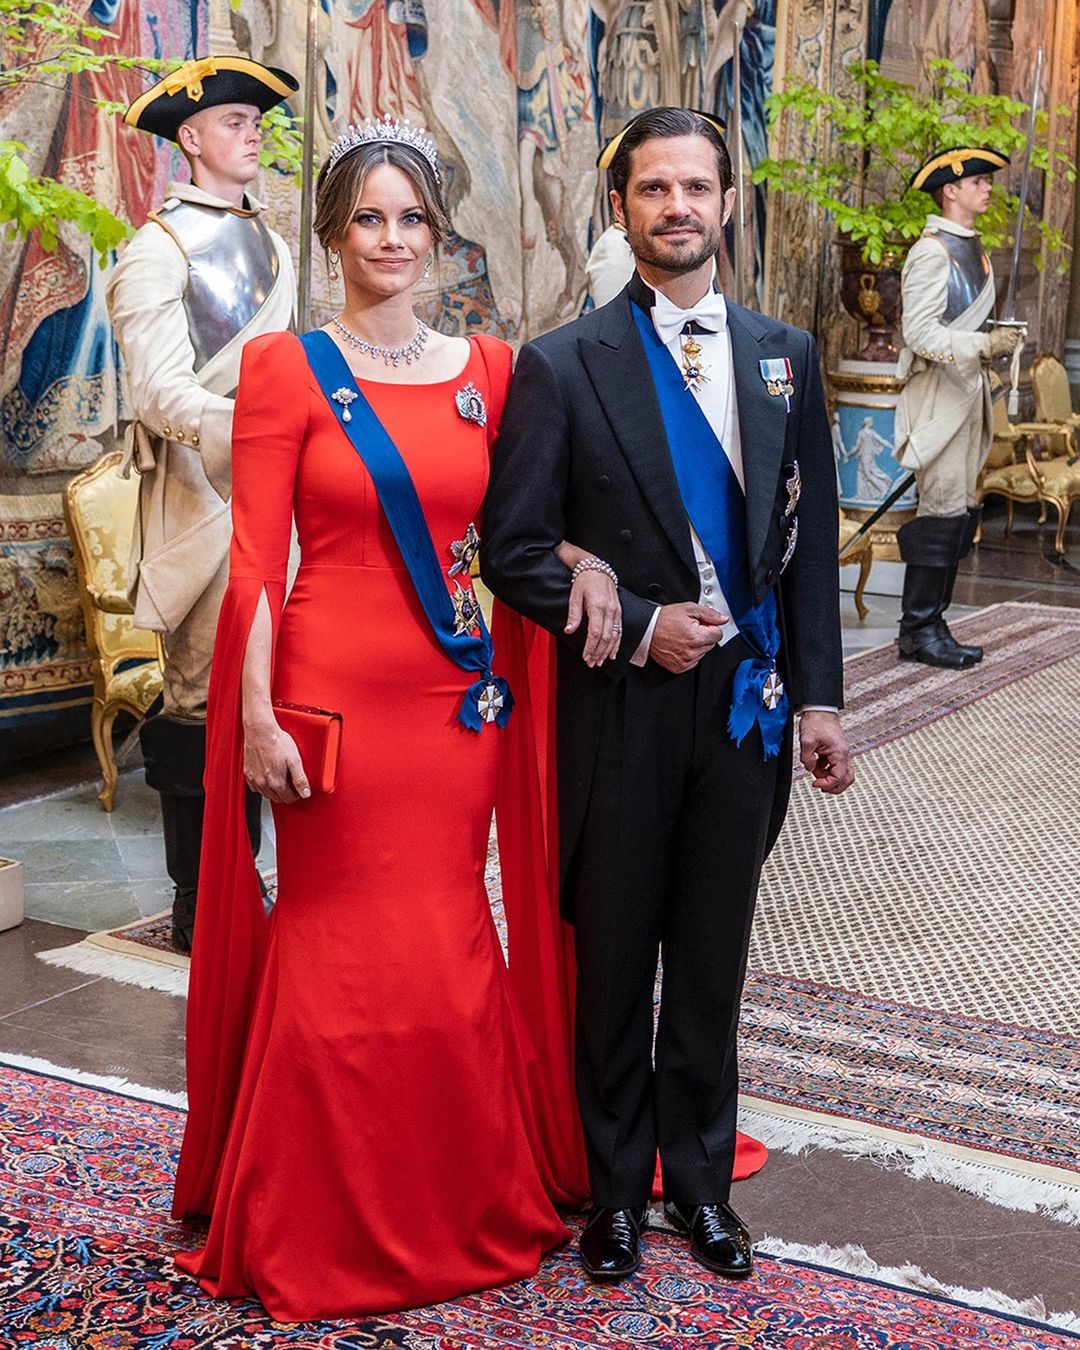 Princesa Casamento Vestir-se – Apps no Google Play